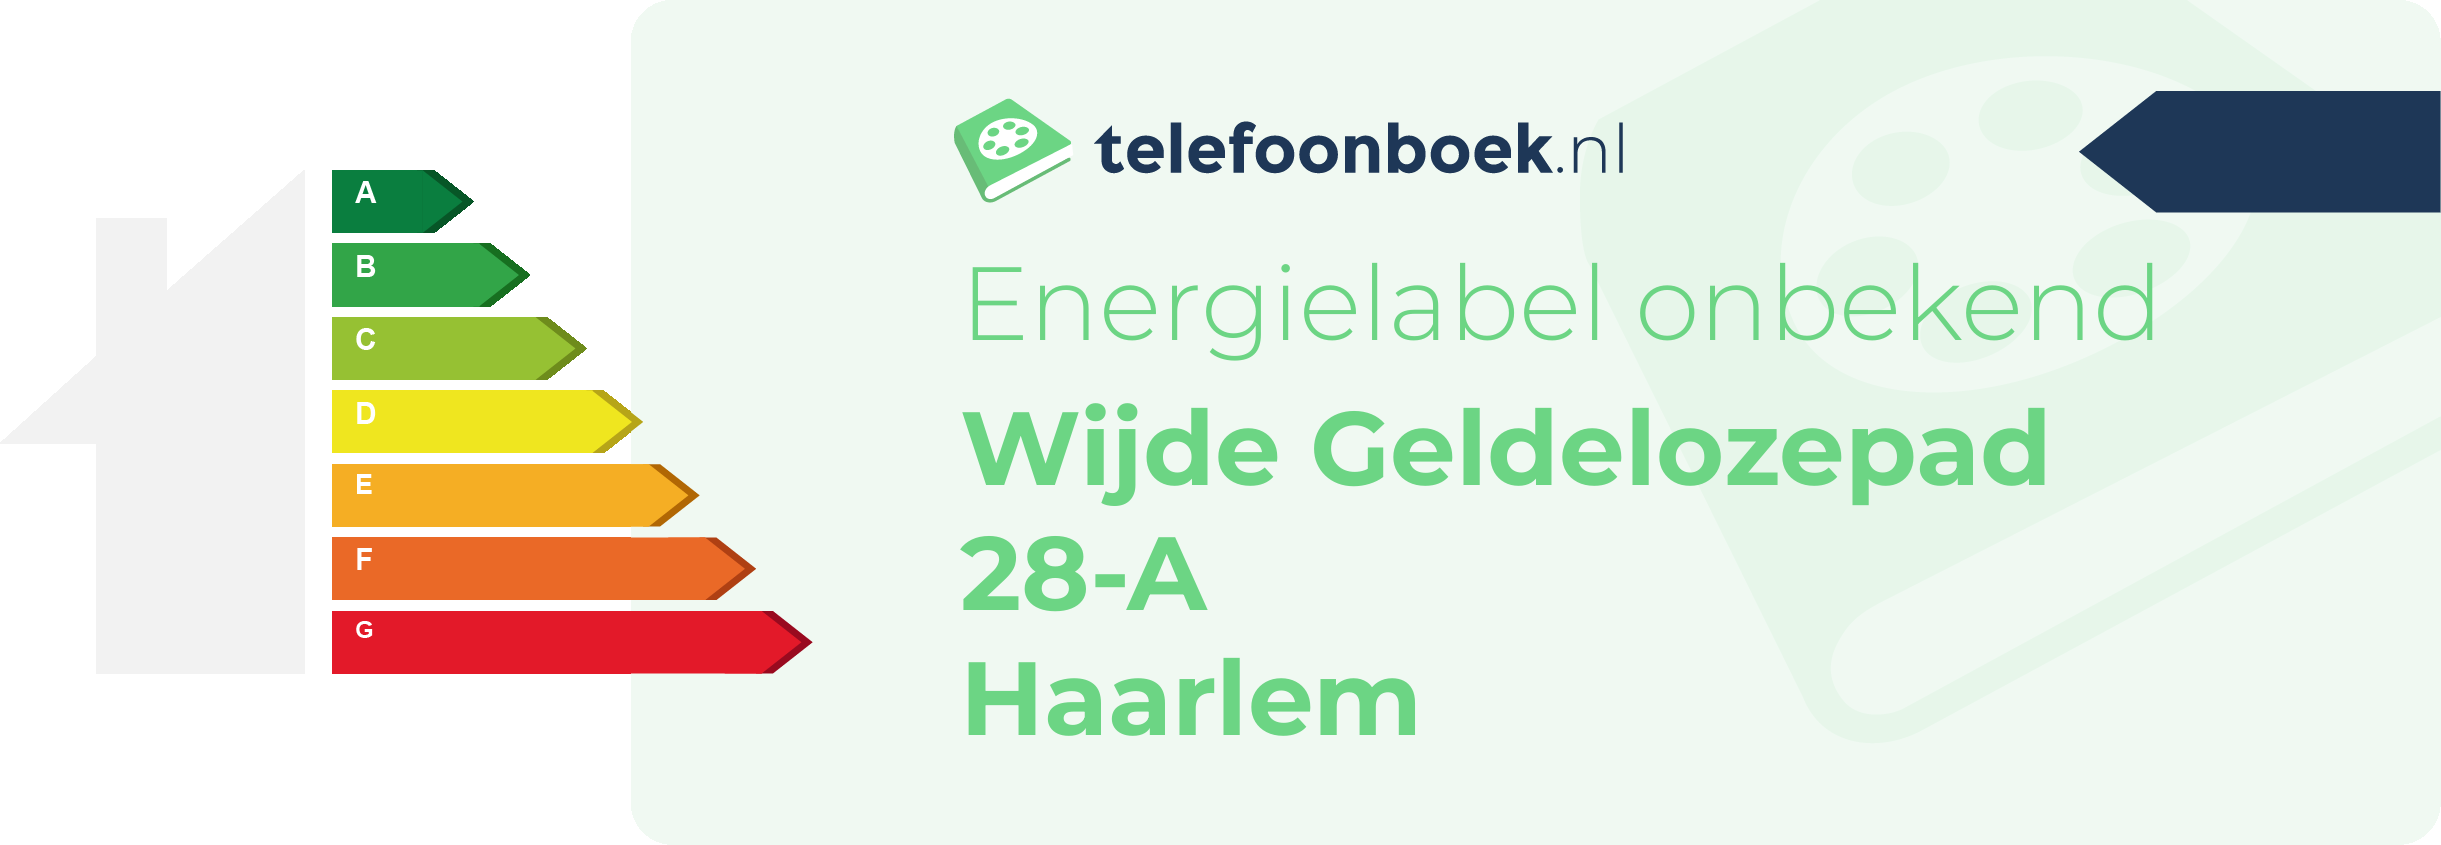 Energielabel Wijde Geldelozepad 28-A Haarlem